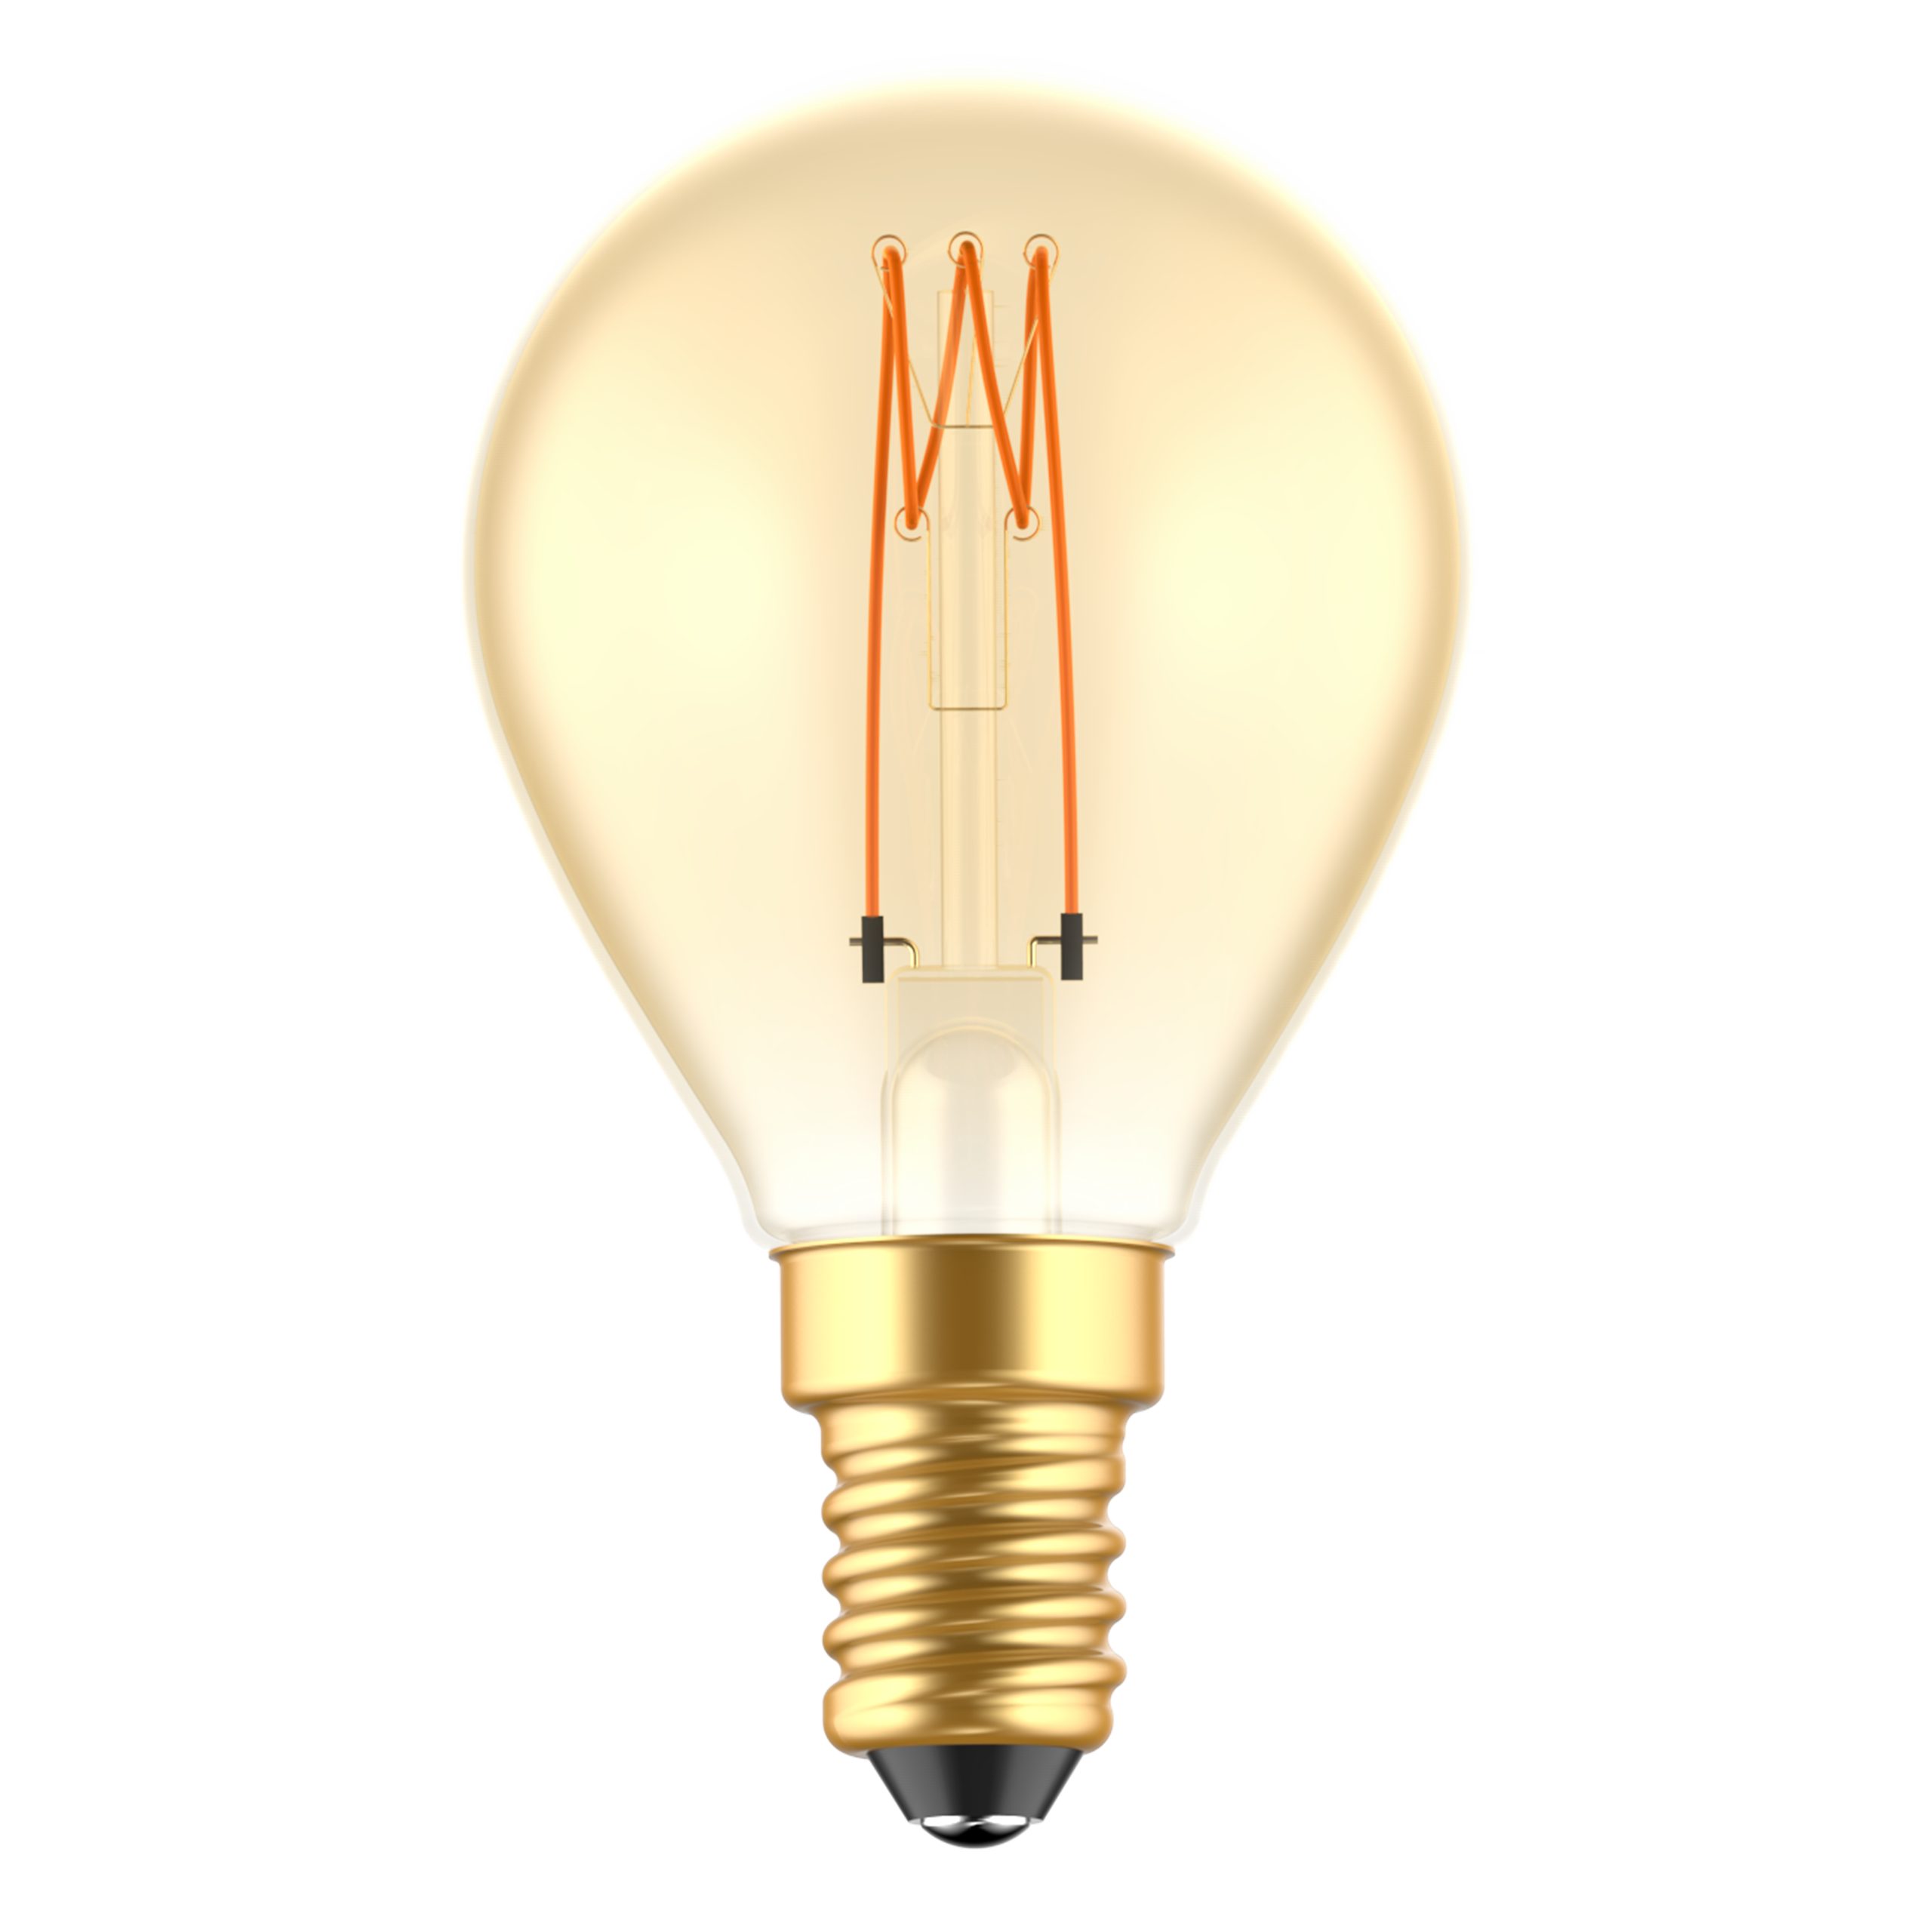 LED's light LED-Leuchtmittel 0620190 LED Kugel, E14, E14 dimmbar 2.5W extra-warmweiß Gold G45 | Leuchtmittel